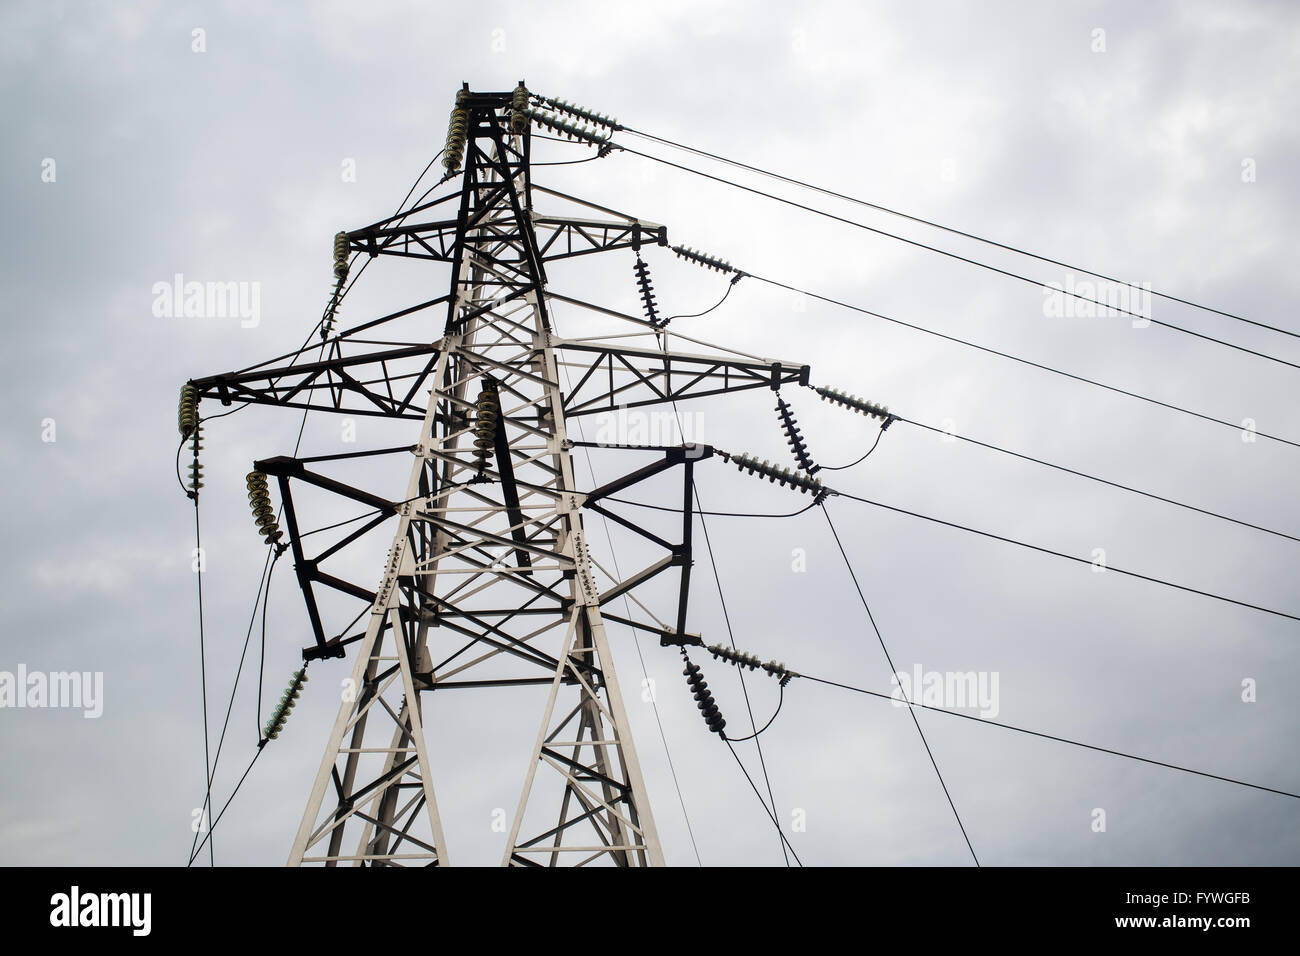 Electricity pylon against cloudy sky Stock Photo